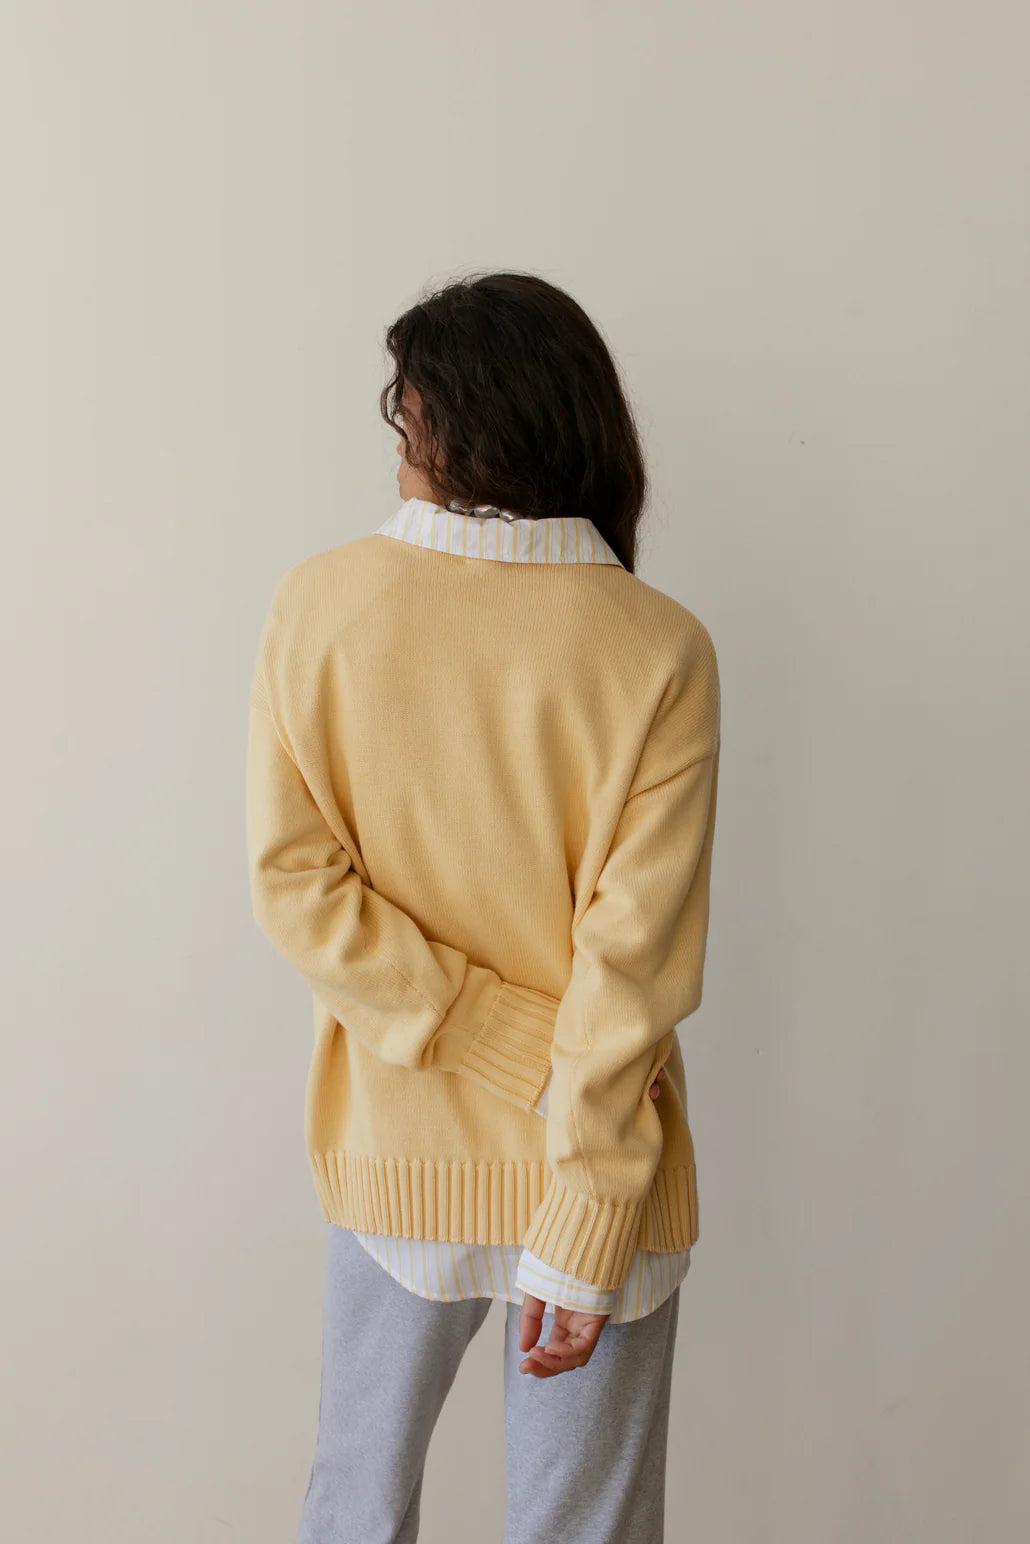 DONNI. The Cotton Knit Crewneck Sweater